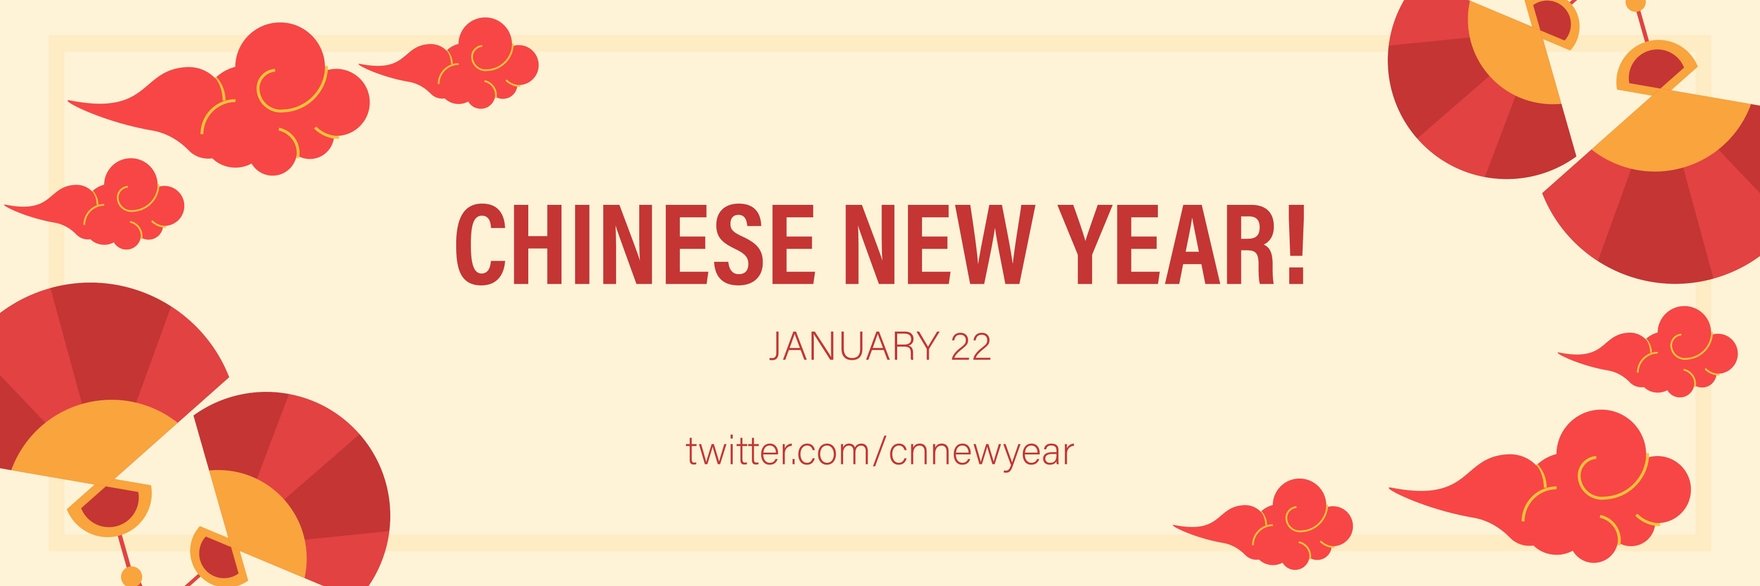 Chinese New Year Twitter Banner